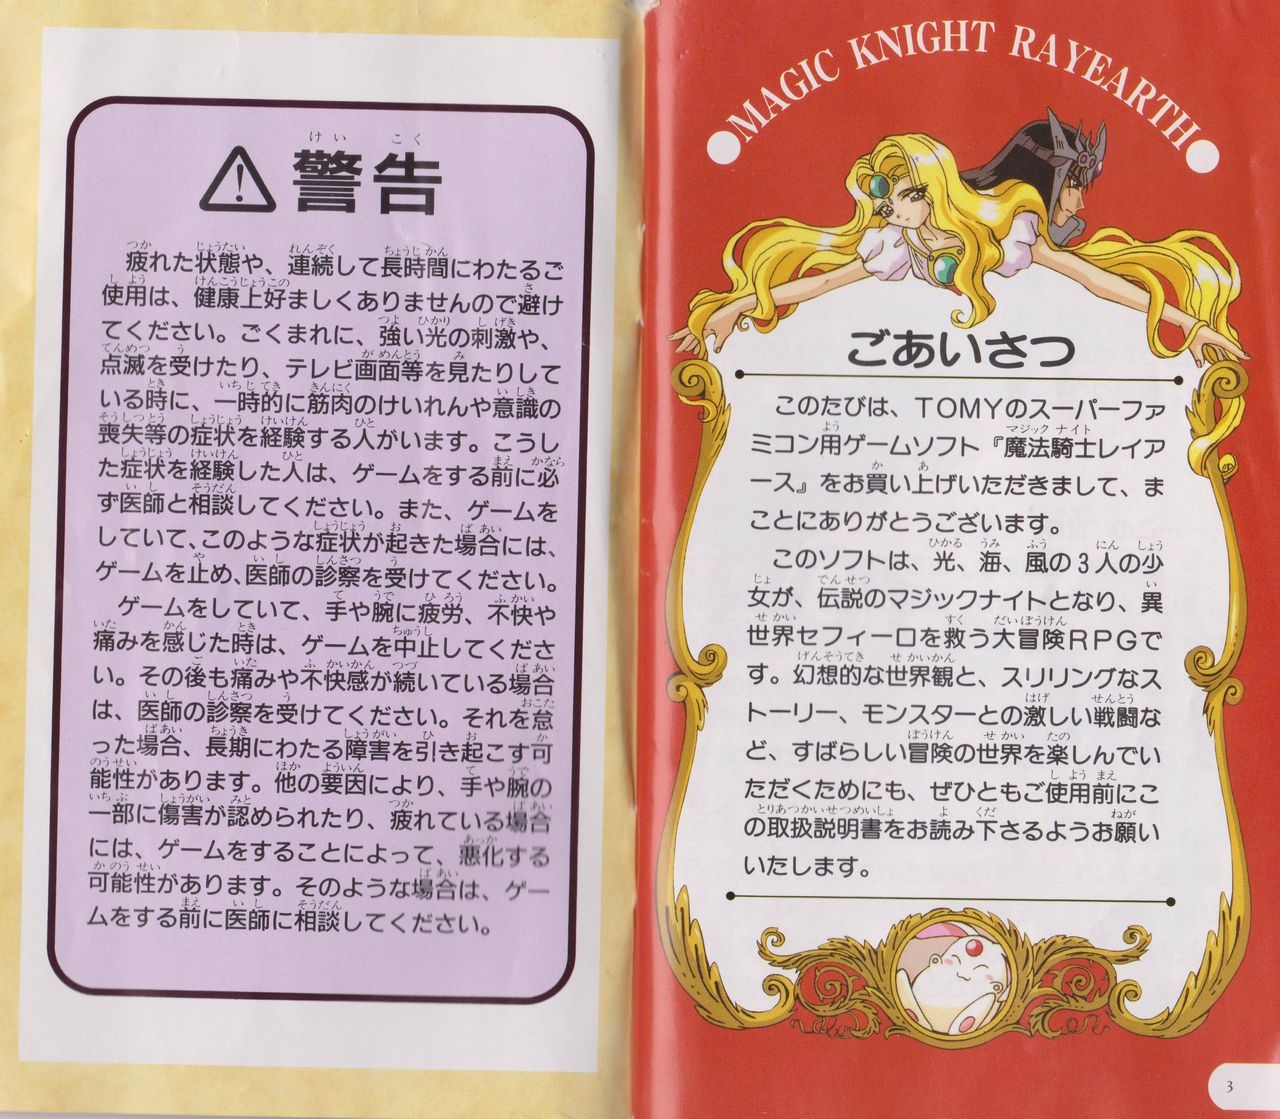 Magic Knight Rayearth - Box & Manual Scans [Super Famicom] 4